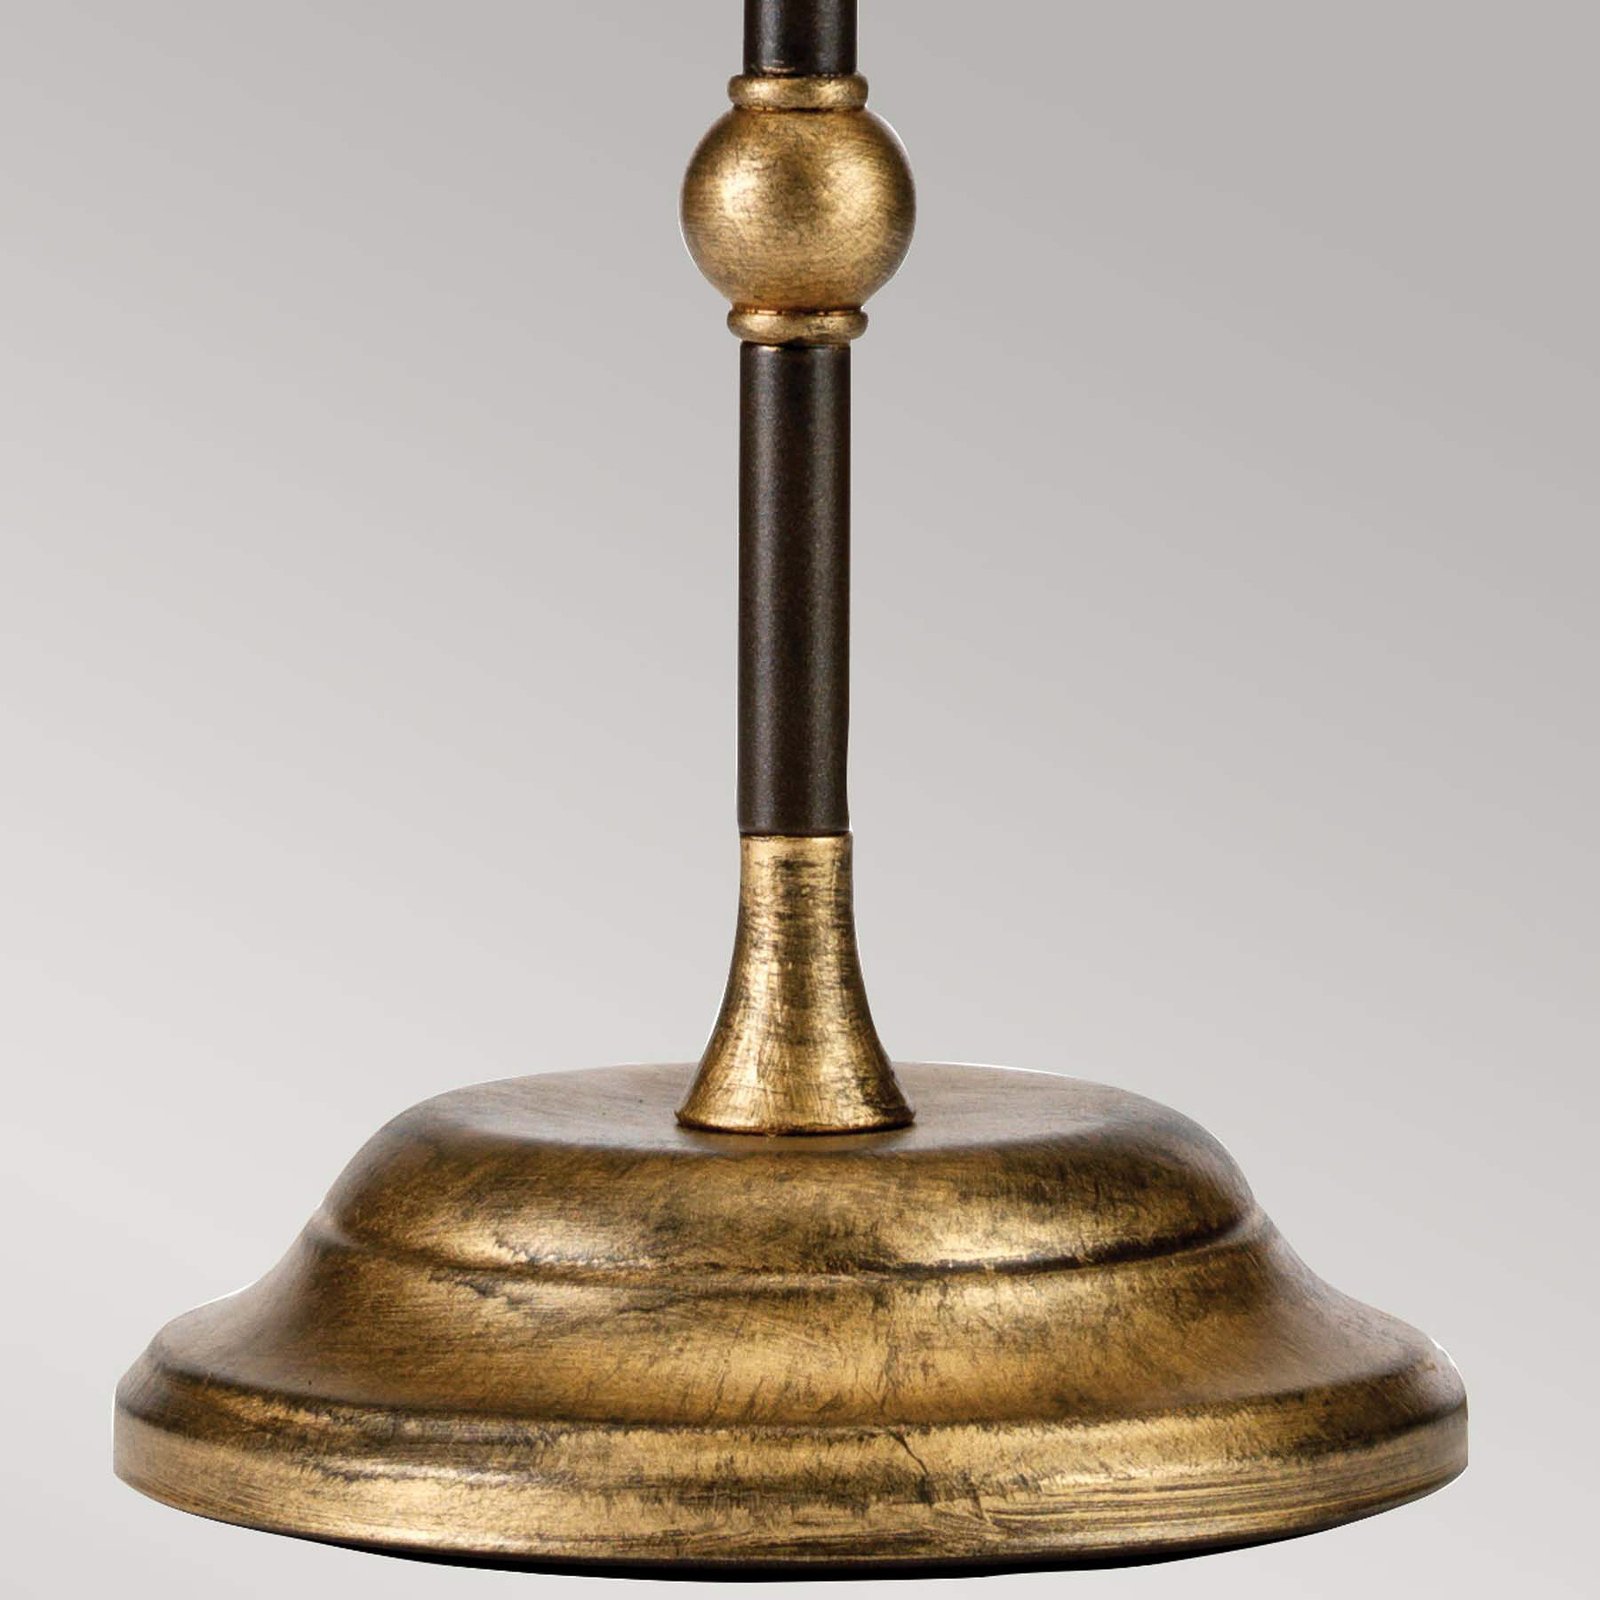 Amarilli table lamp, bronze, white textile shade